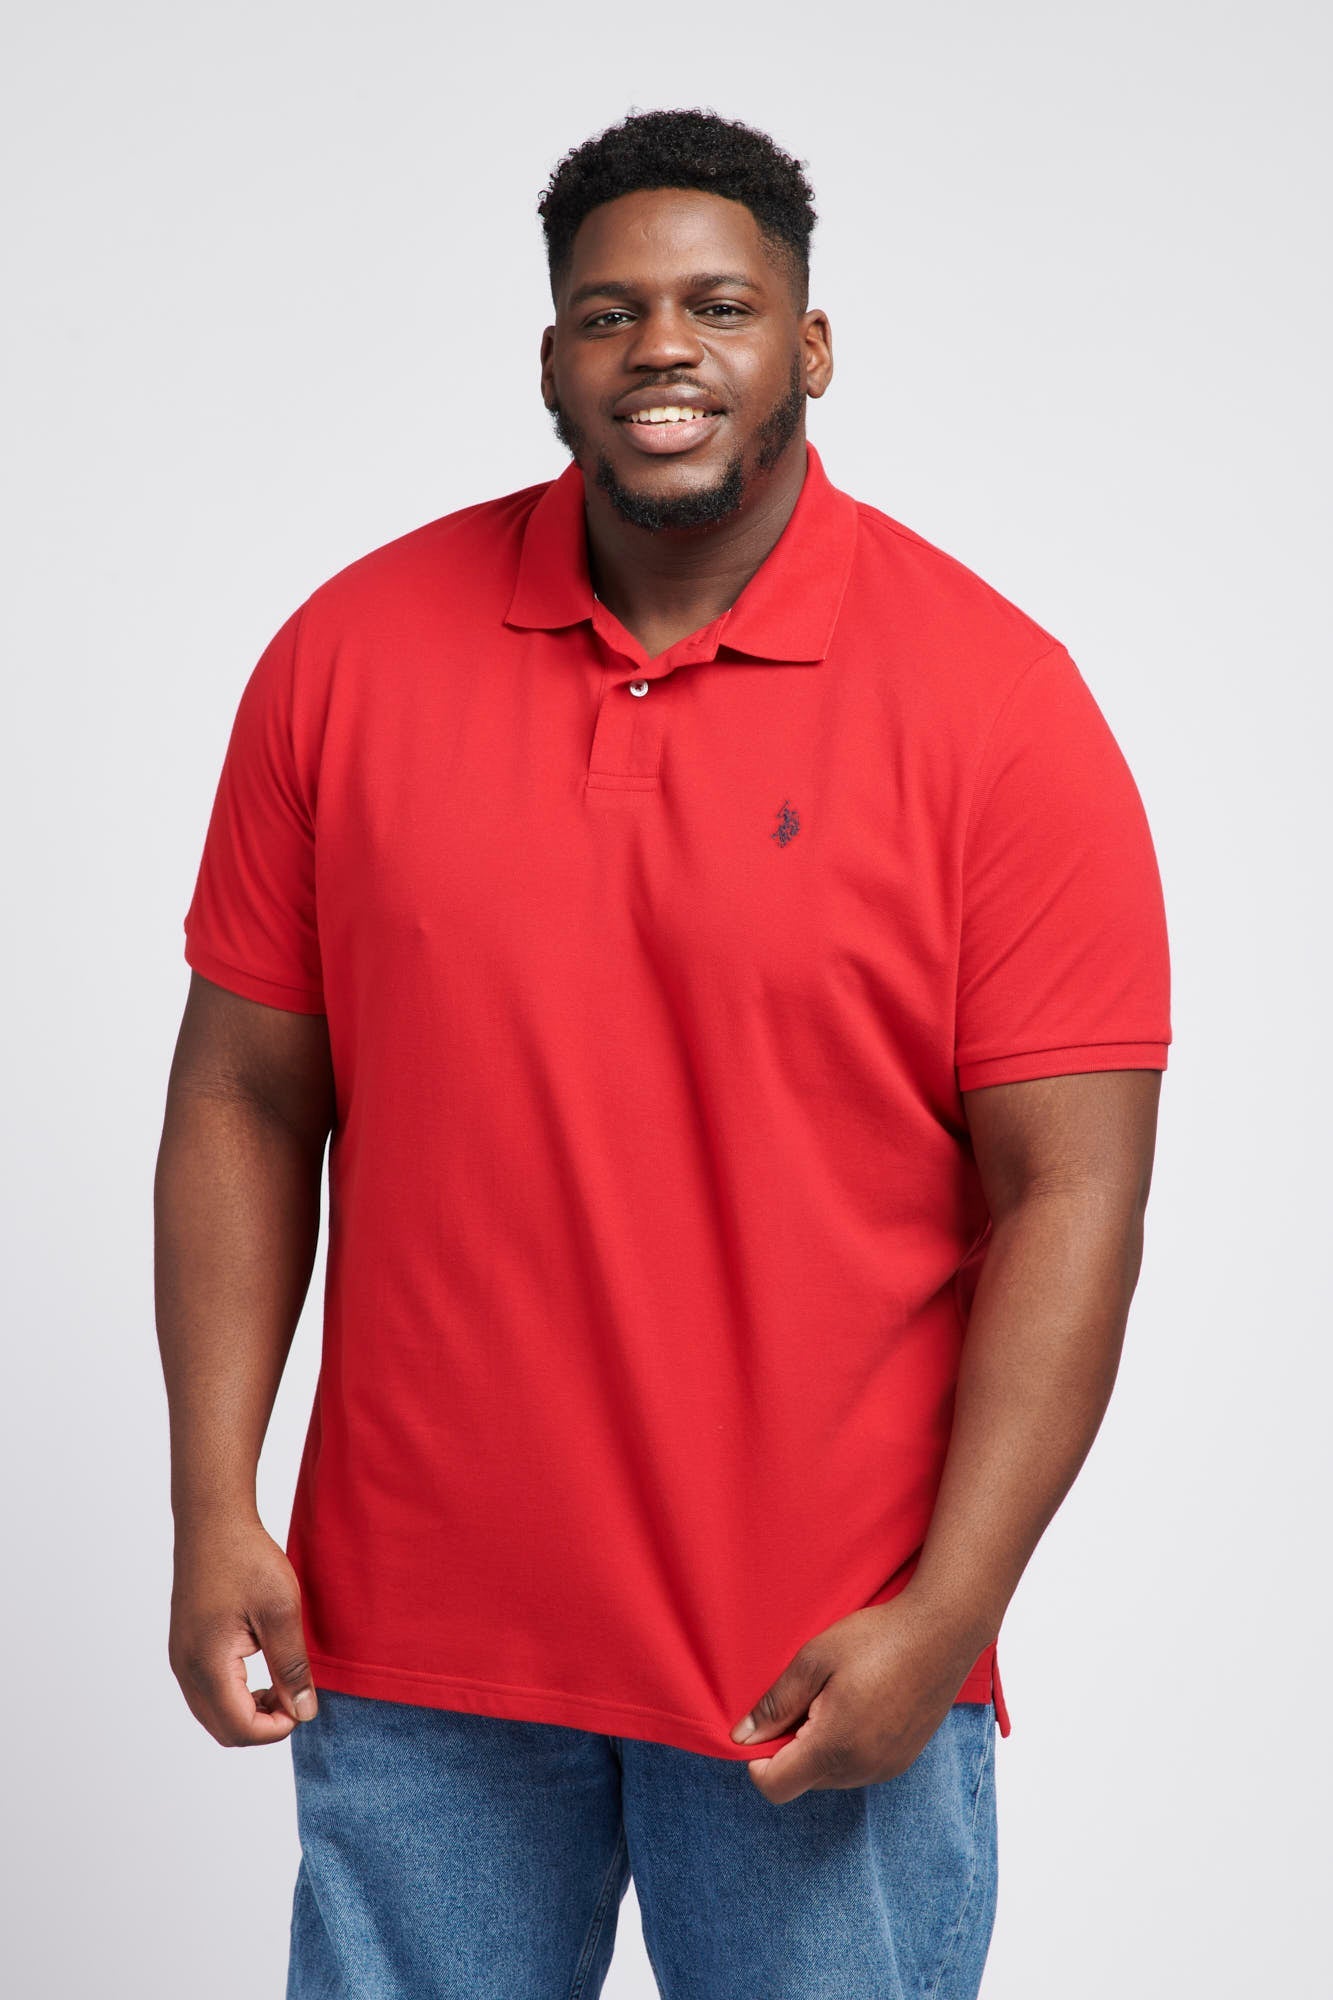 U.S. Polo Assn. Mens Big & Tall Core Pique Polo Shirt in Haute Red